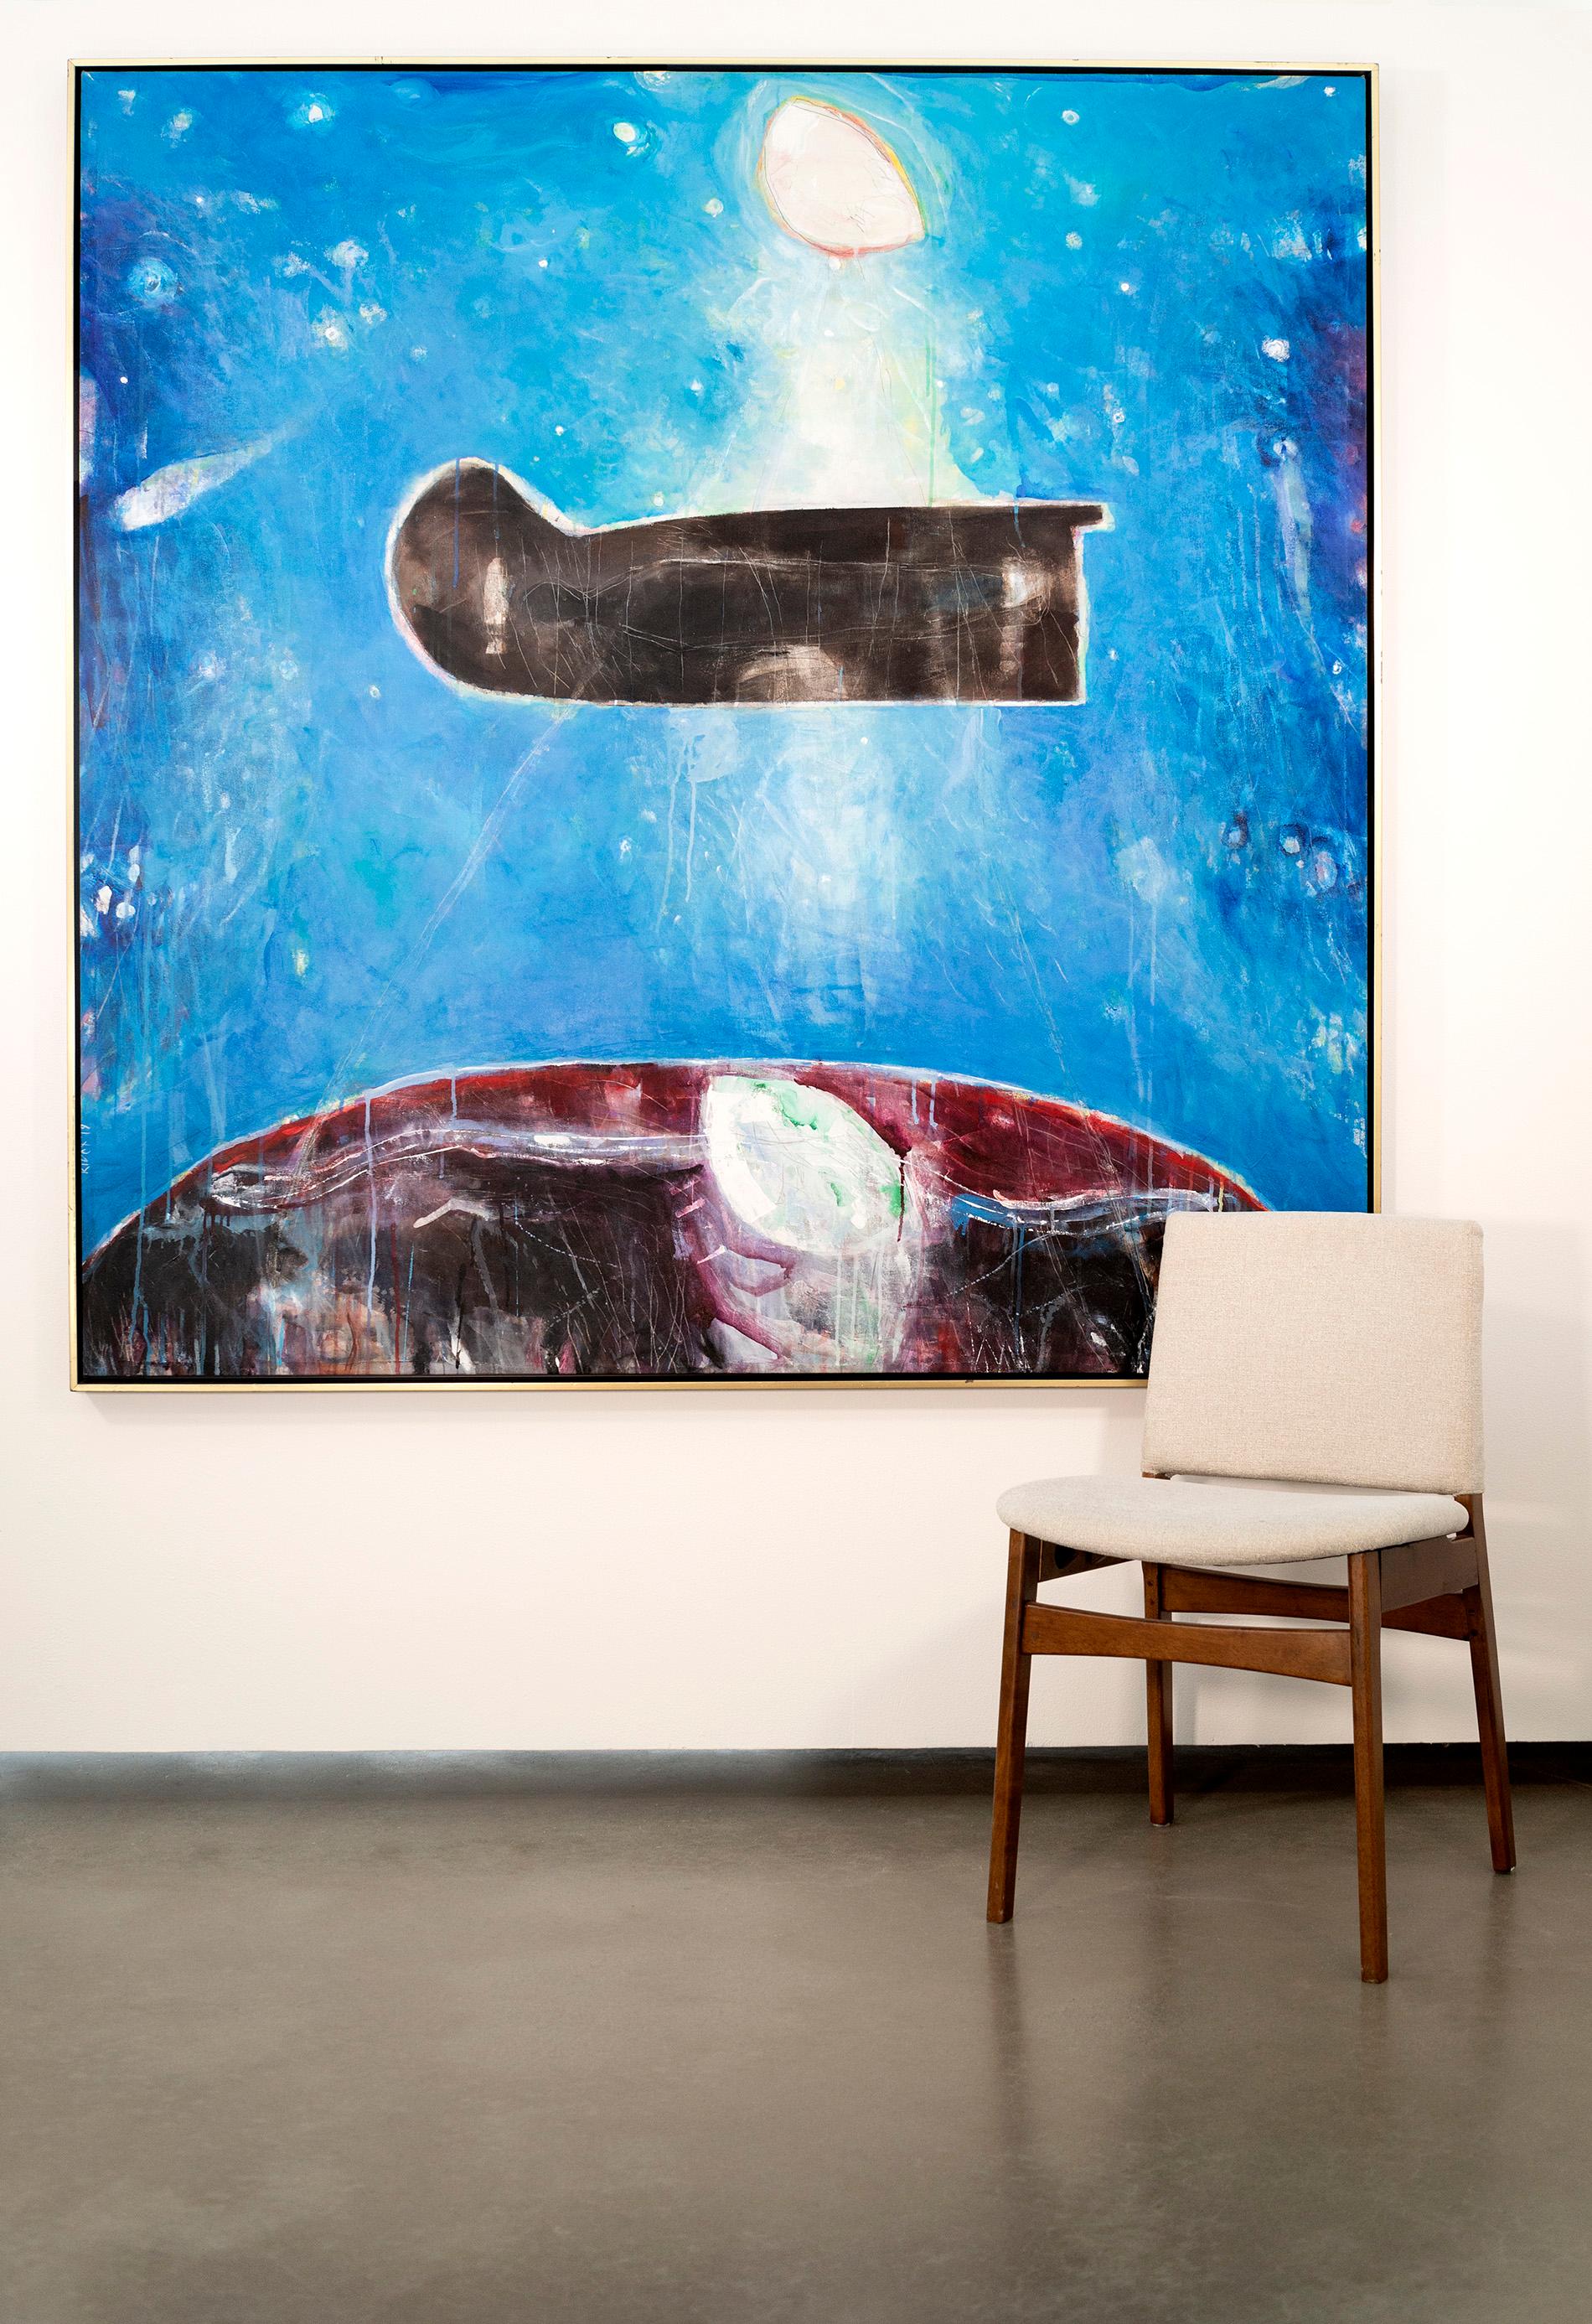 Northwest Passage No 5 - blue, black, indigenous, abstract, acrylic on canvas 6